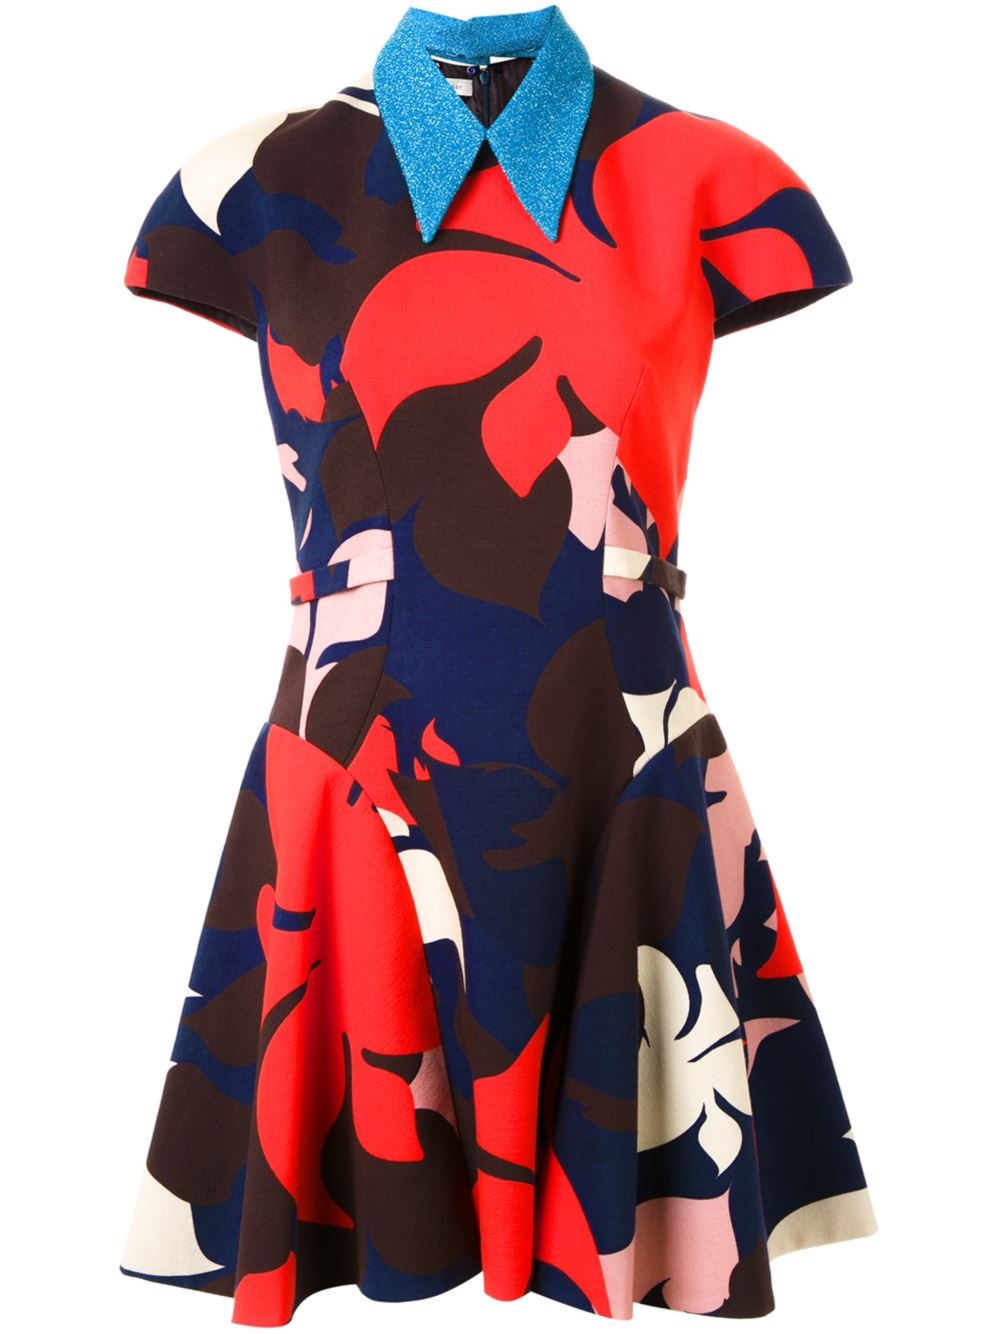 Splurge: Celine Dion’s The Today Show Delpozo Floral Print Flare Dress